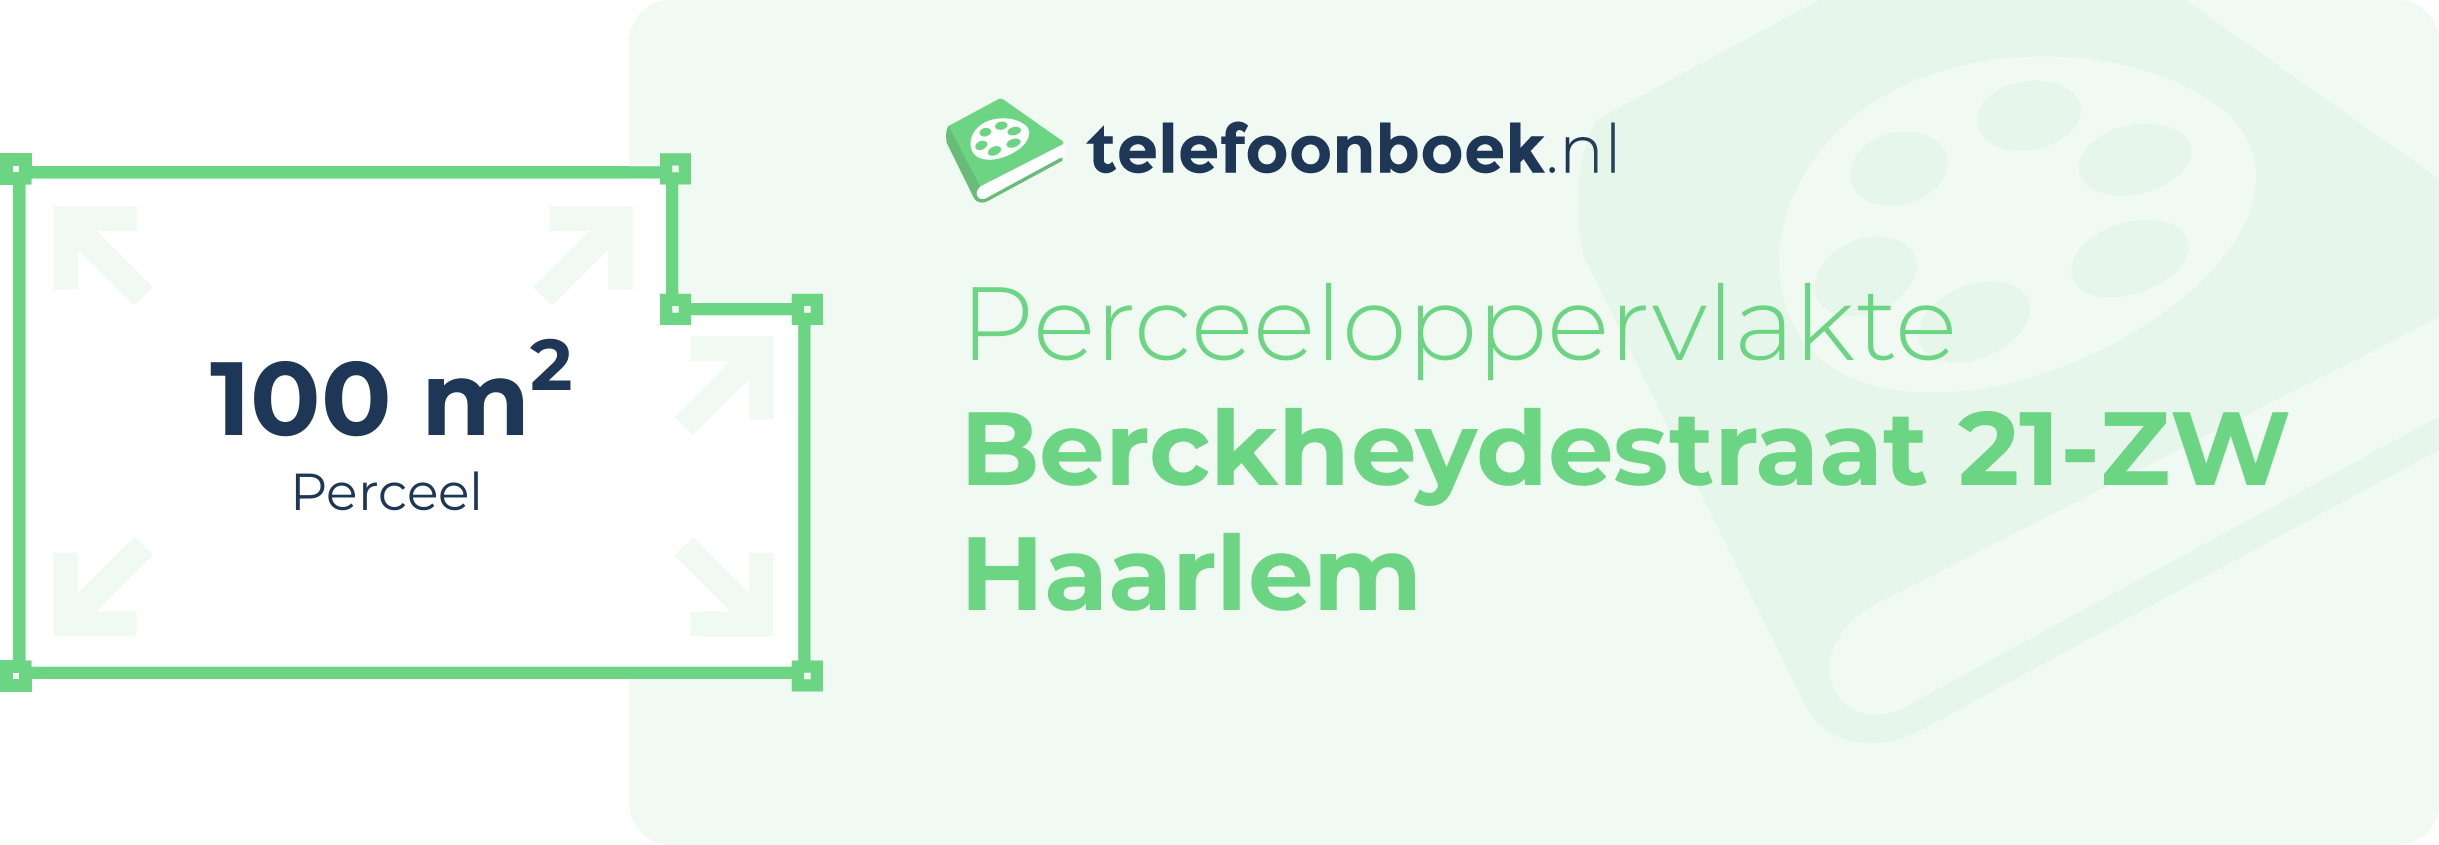 Perceeloppervlakte Berckheydestraat 21-ZW Haarlem